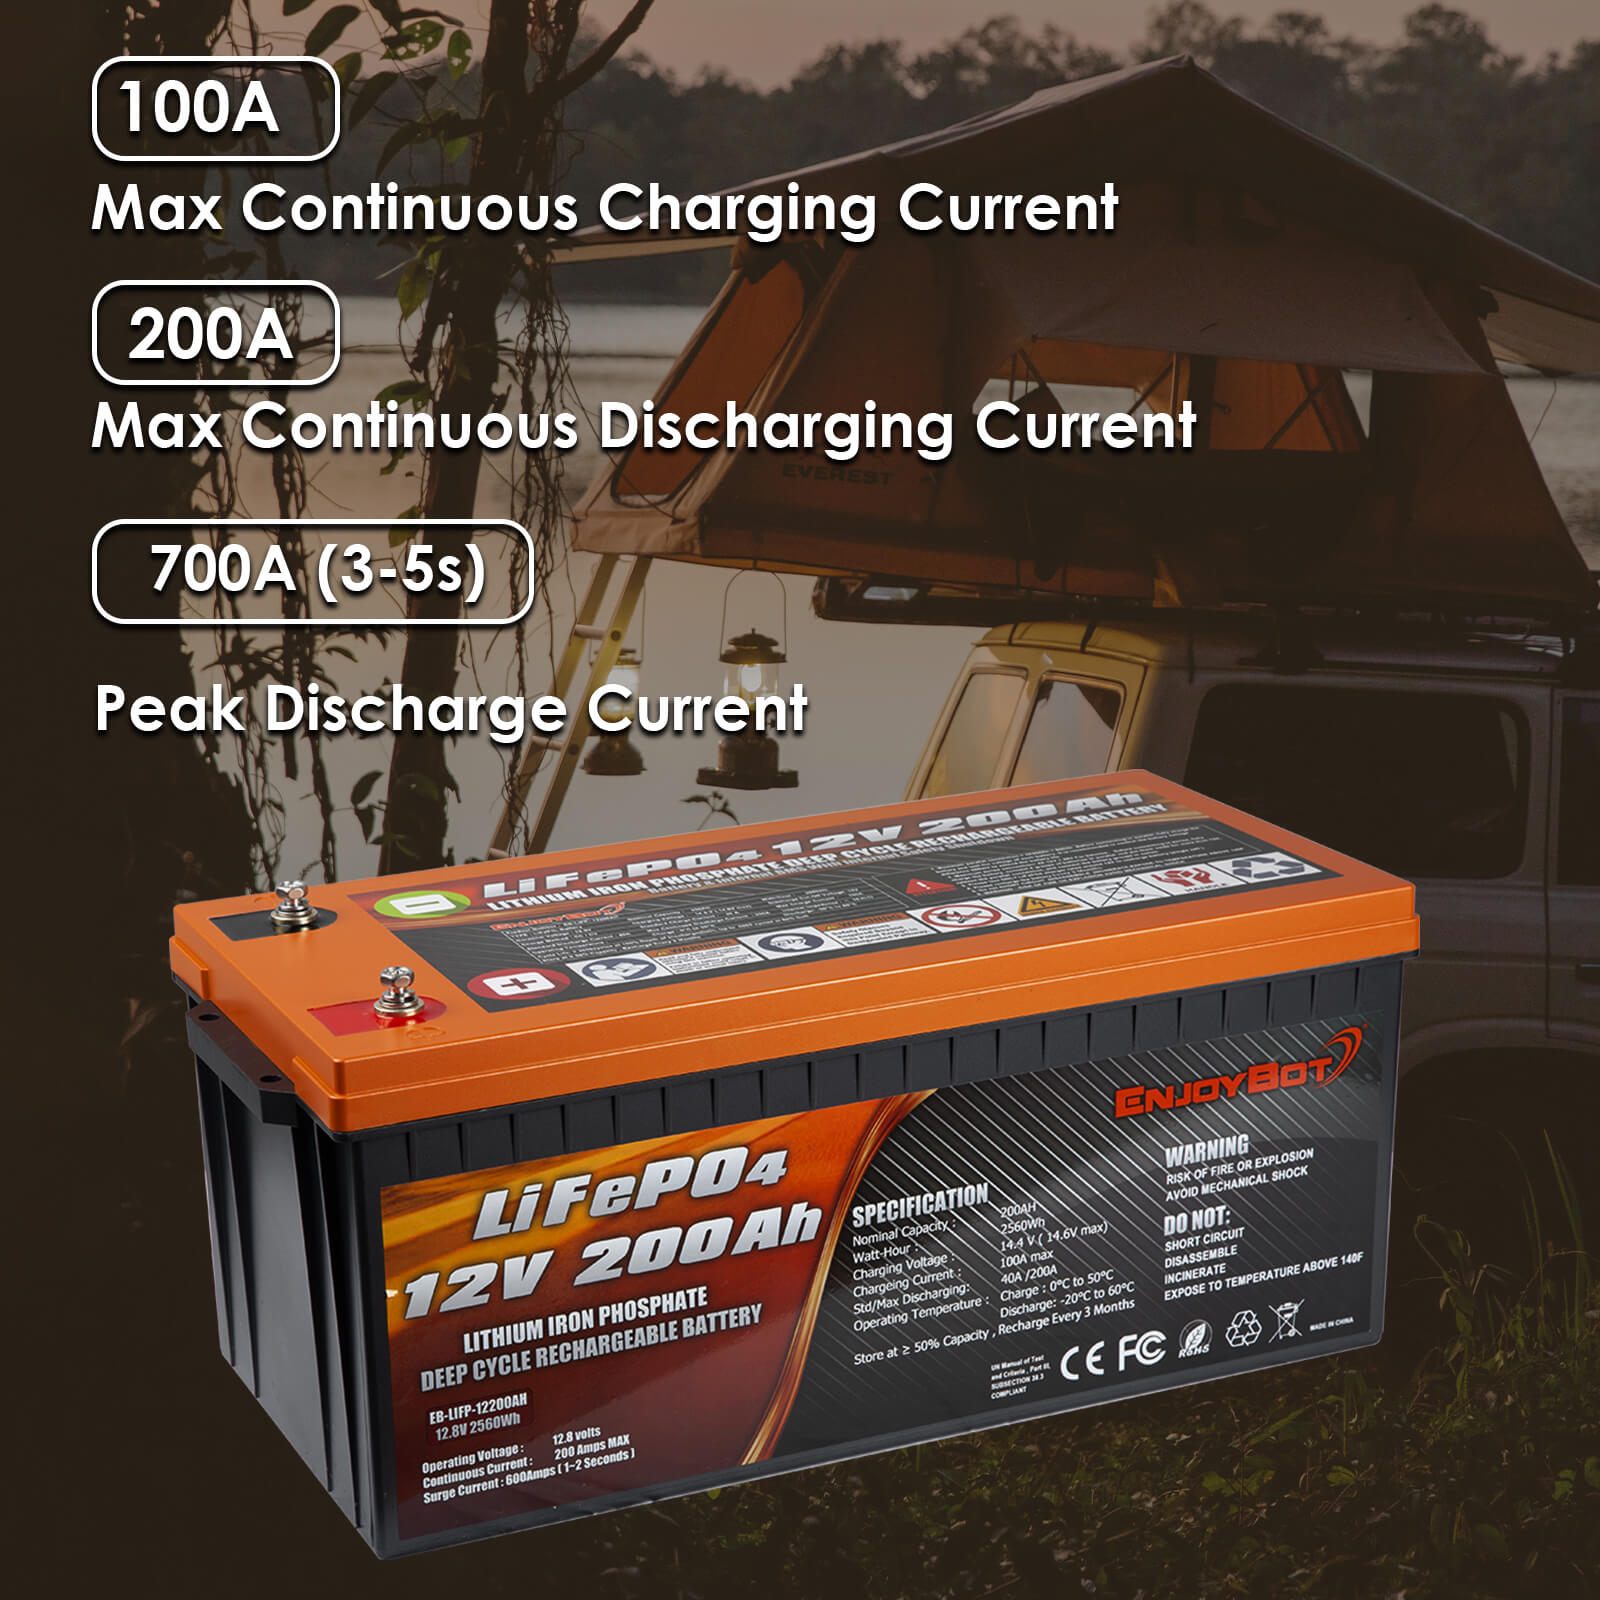 Enjoybot 12v 200ah LiFePO4 Battery - Max Current